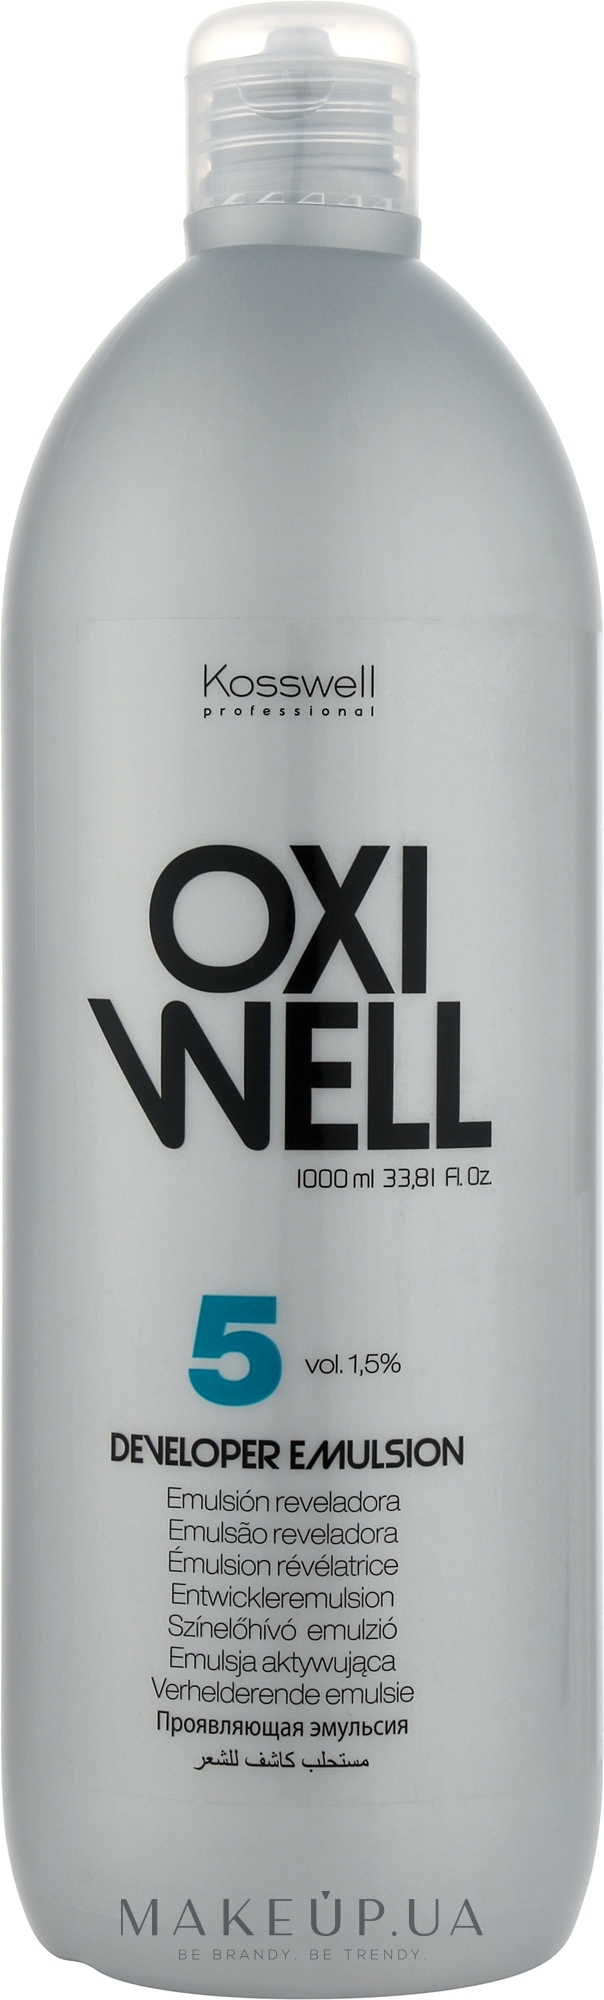 Окислительная эмульсия, 1,5% - Kosswell Professional Equium Oxidizing Emulsion Oxiwell 1,5% 5 vol — фото 1000ml